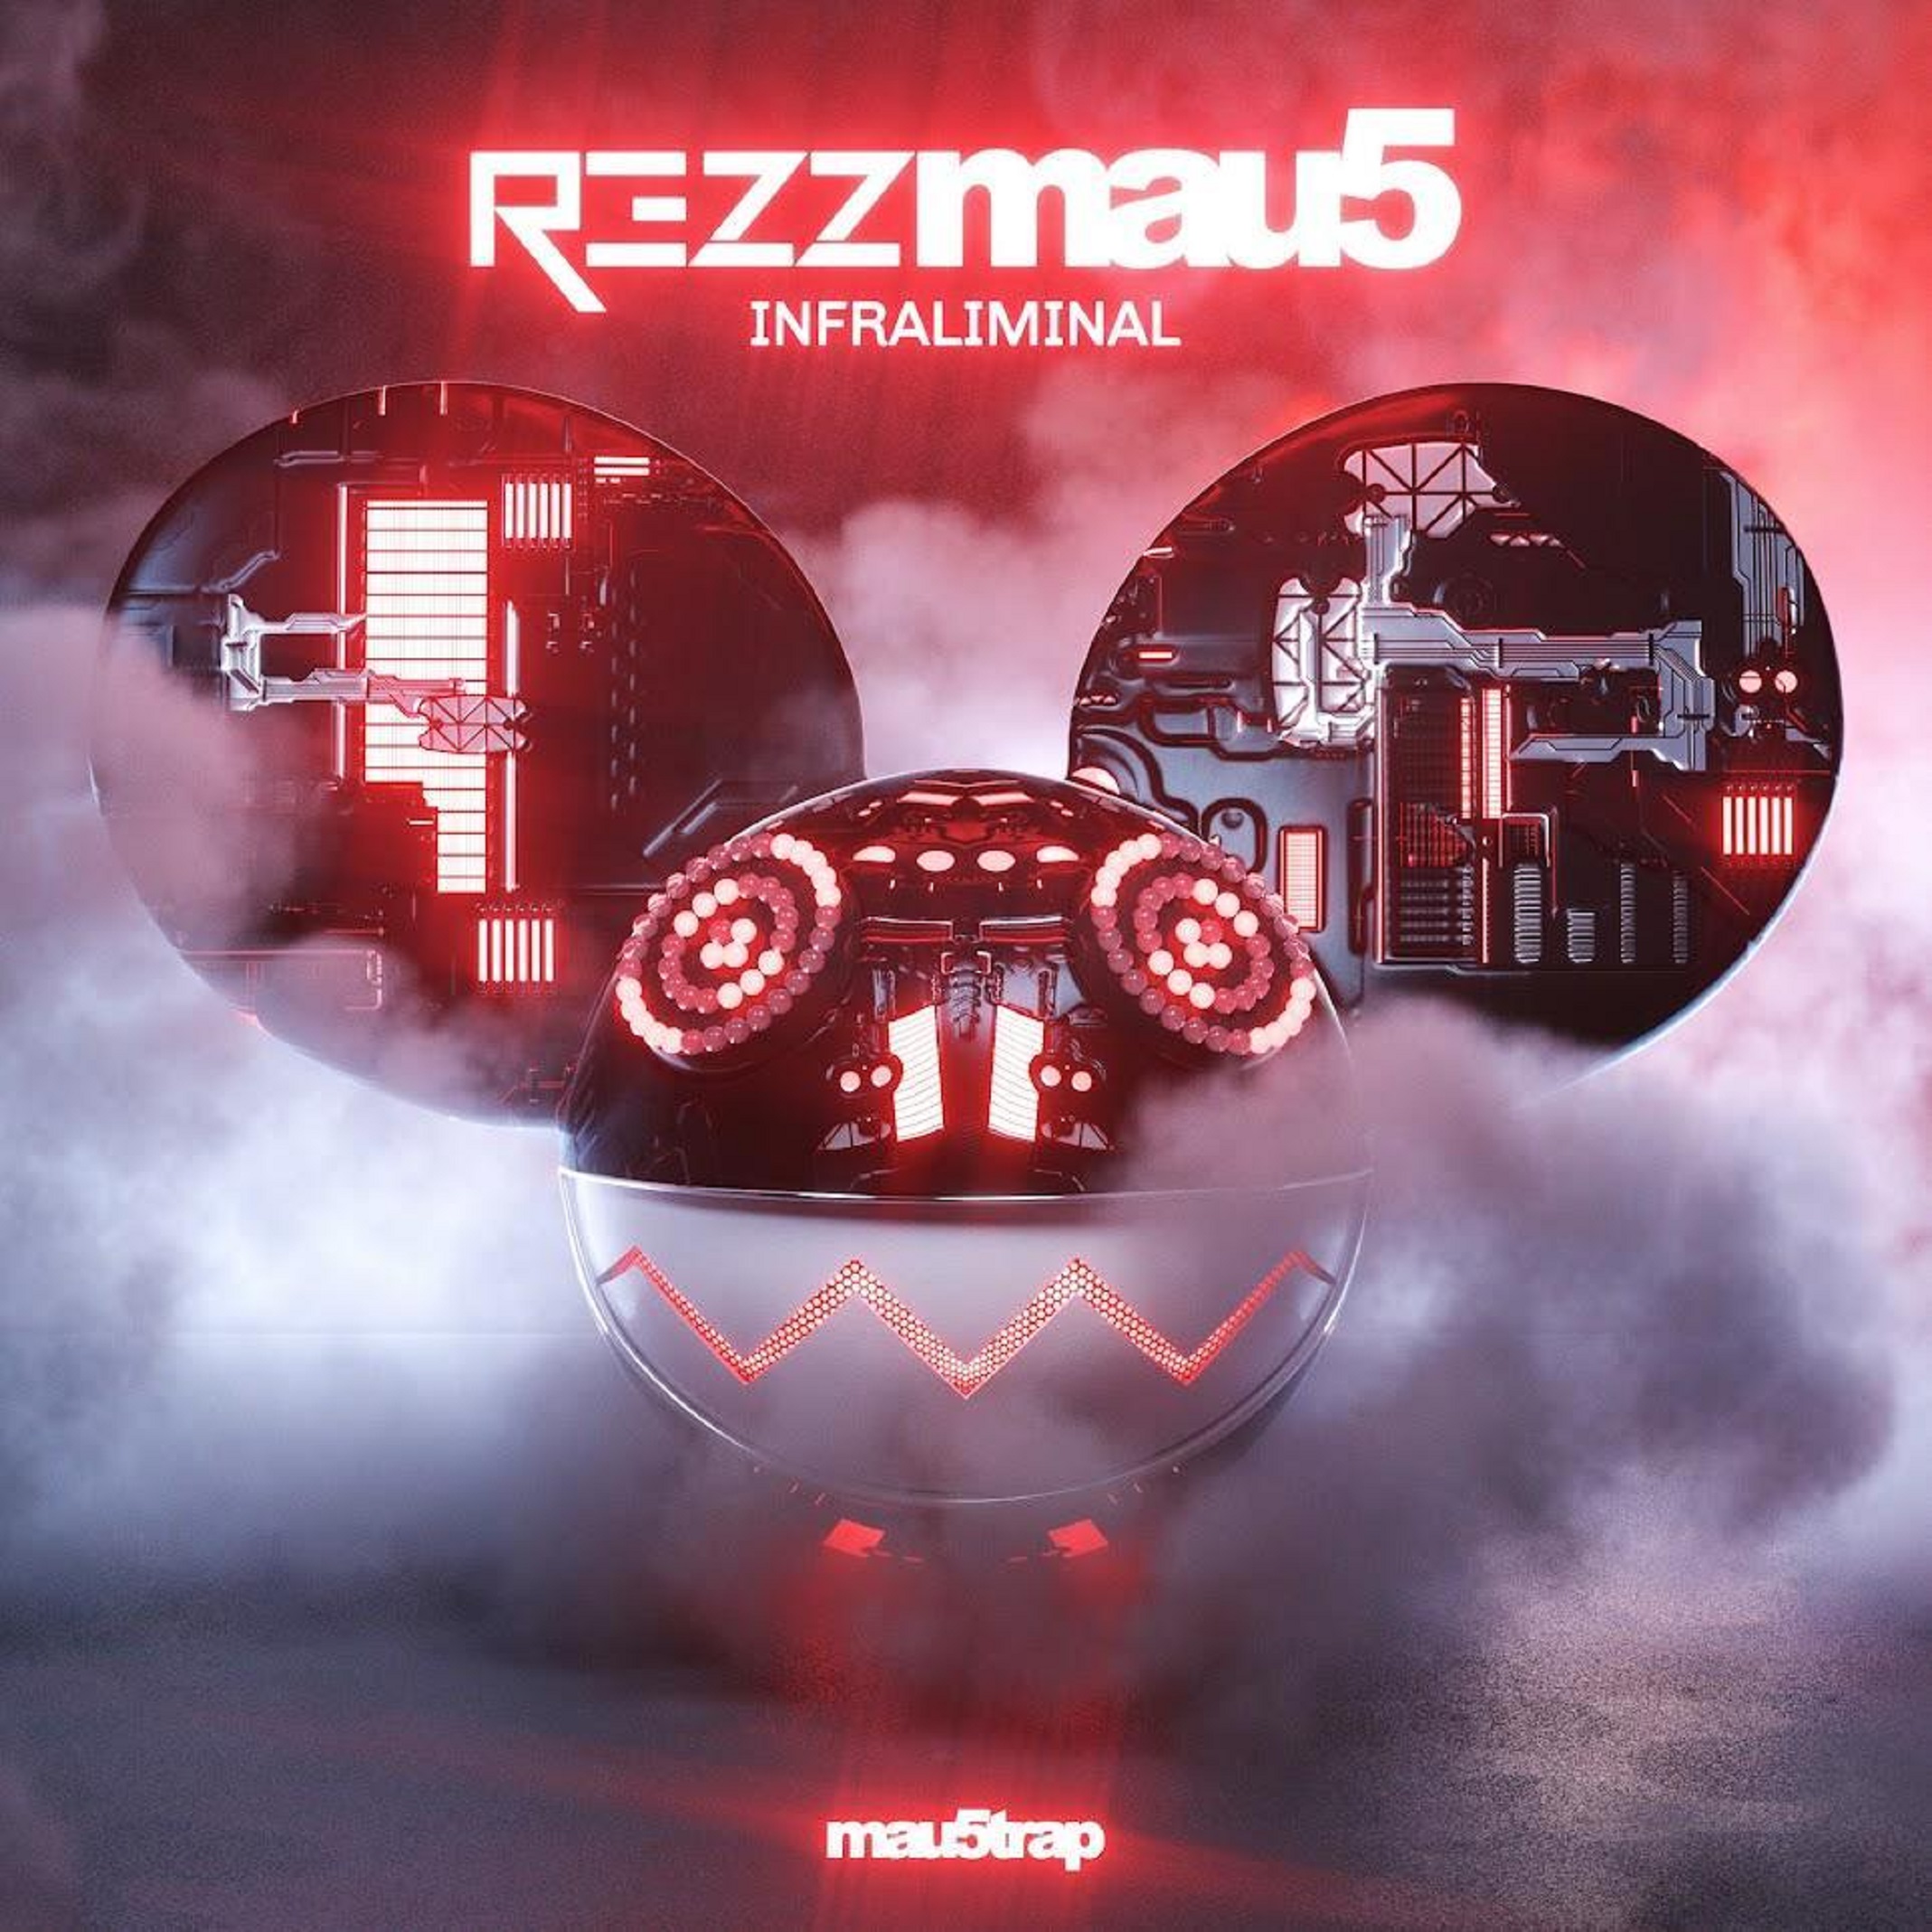 deadmau5 + REZZ Present: REZZMAU5 - New Single “Infraliminal” Out Today, October 13 On mau5trap